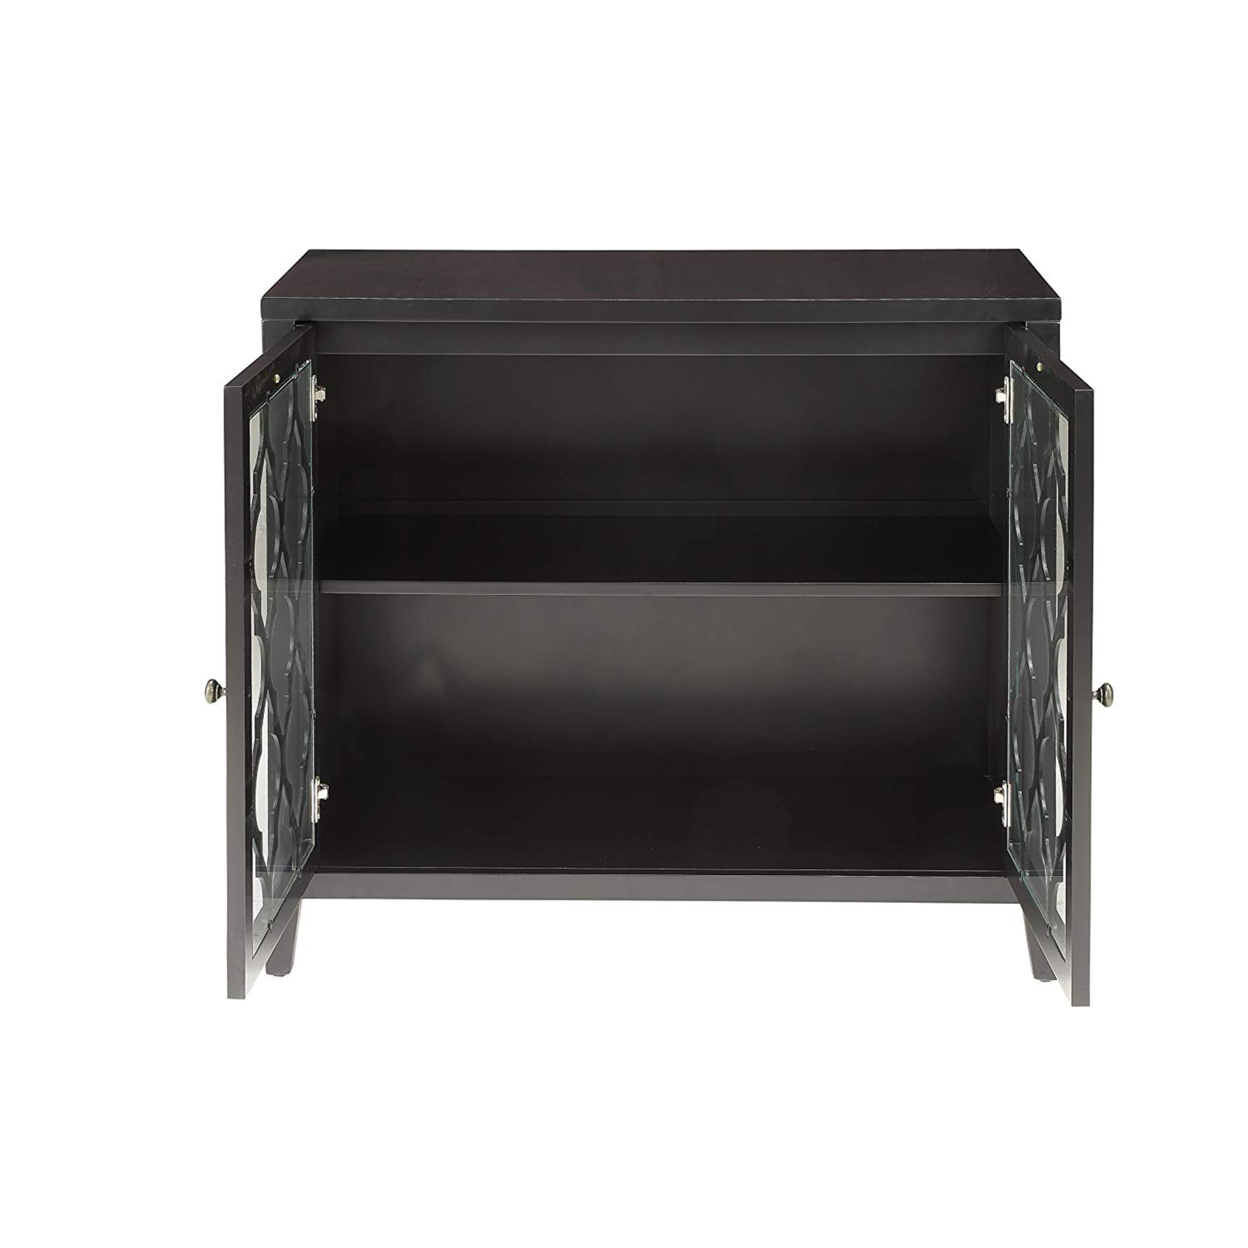 Storage Cabinet With 2 Doors And Quatrefoil Design, Black- Saltoro Sherpi